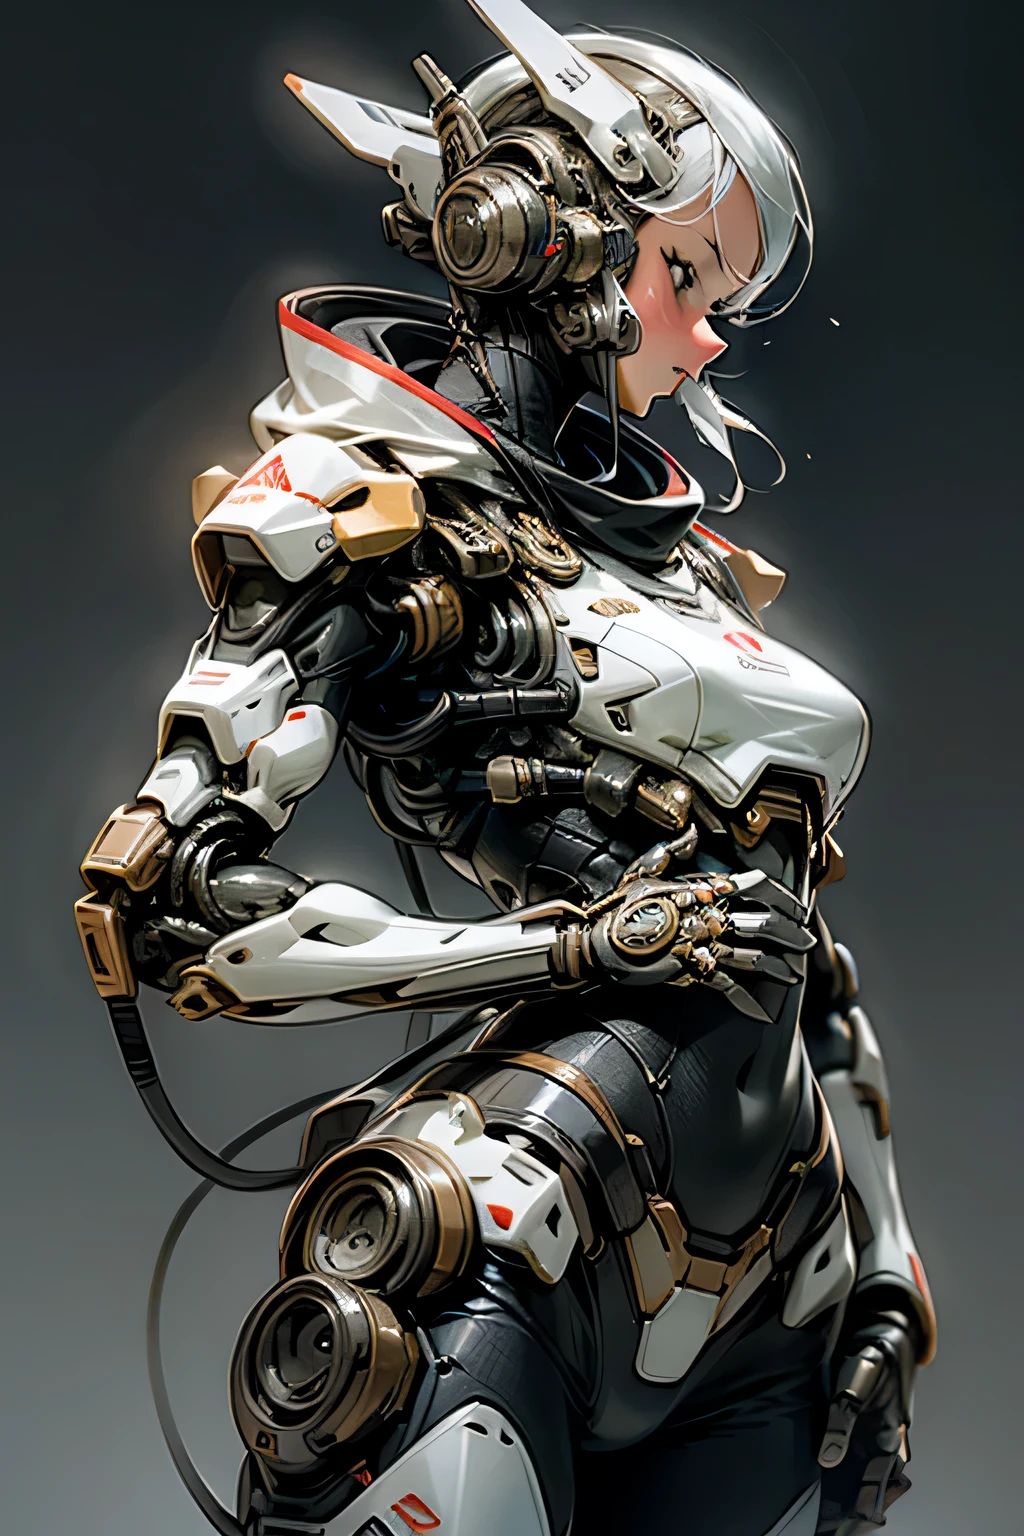 機器人, humanoid 機器人, 機器人 joint, 巨大的乳房